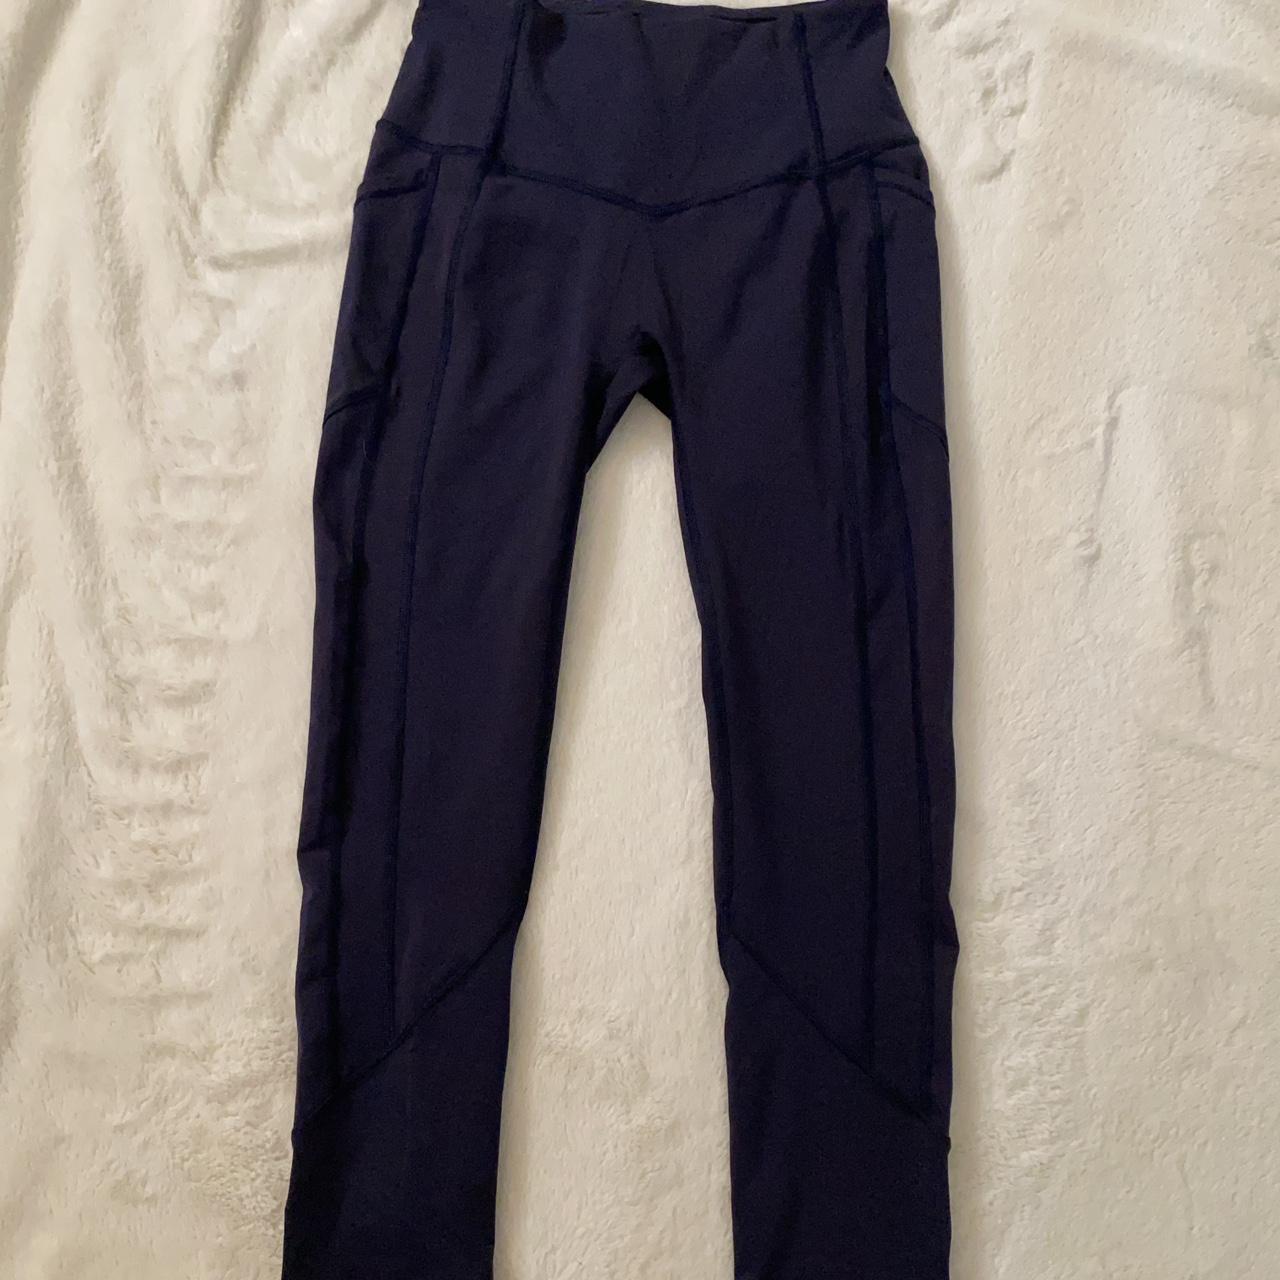 lululemon leggings navy blue with multiple pockets - Depop